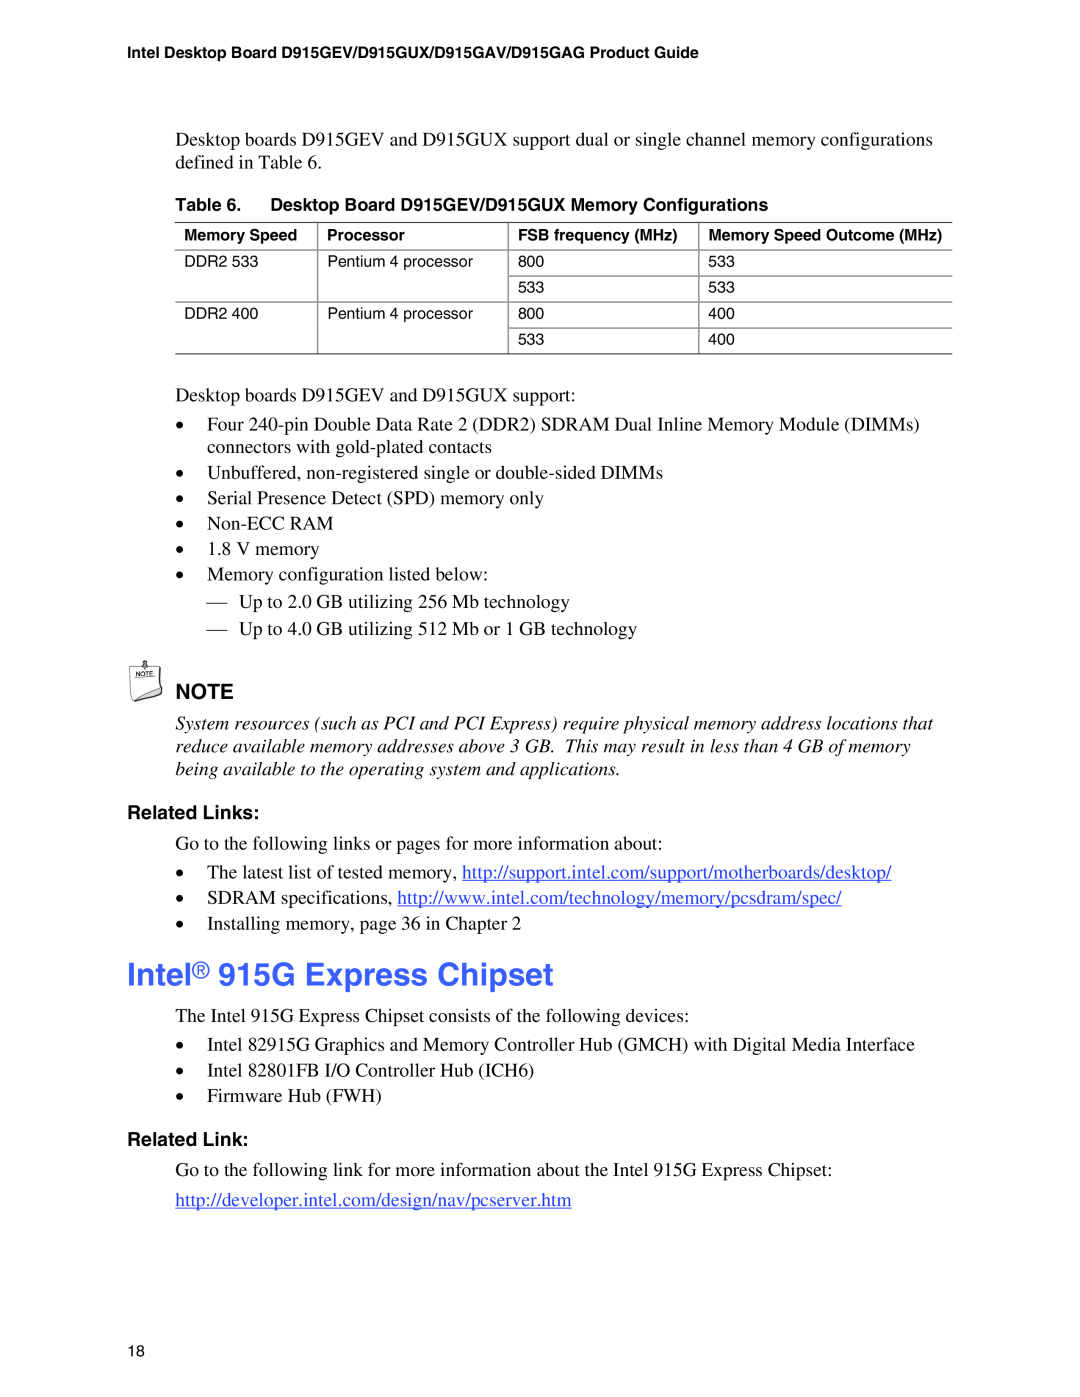 Intel D915GEV, D915GAG, D915GUX, D915GAV manual Intel 915G Express Chipset, Related Links 